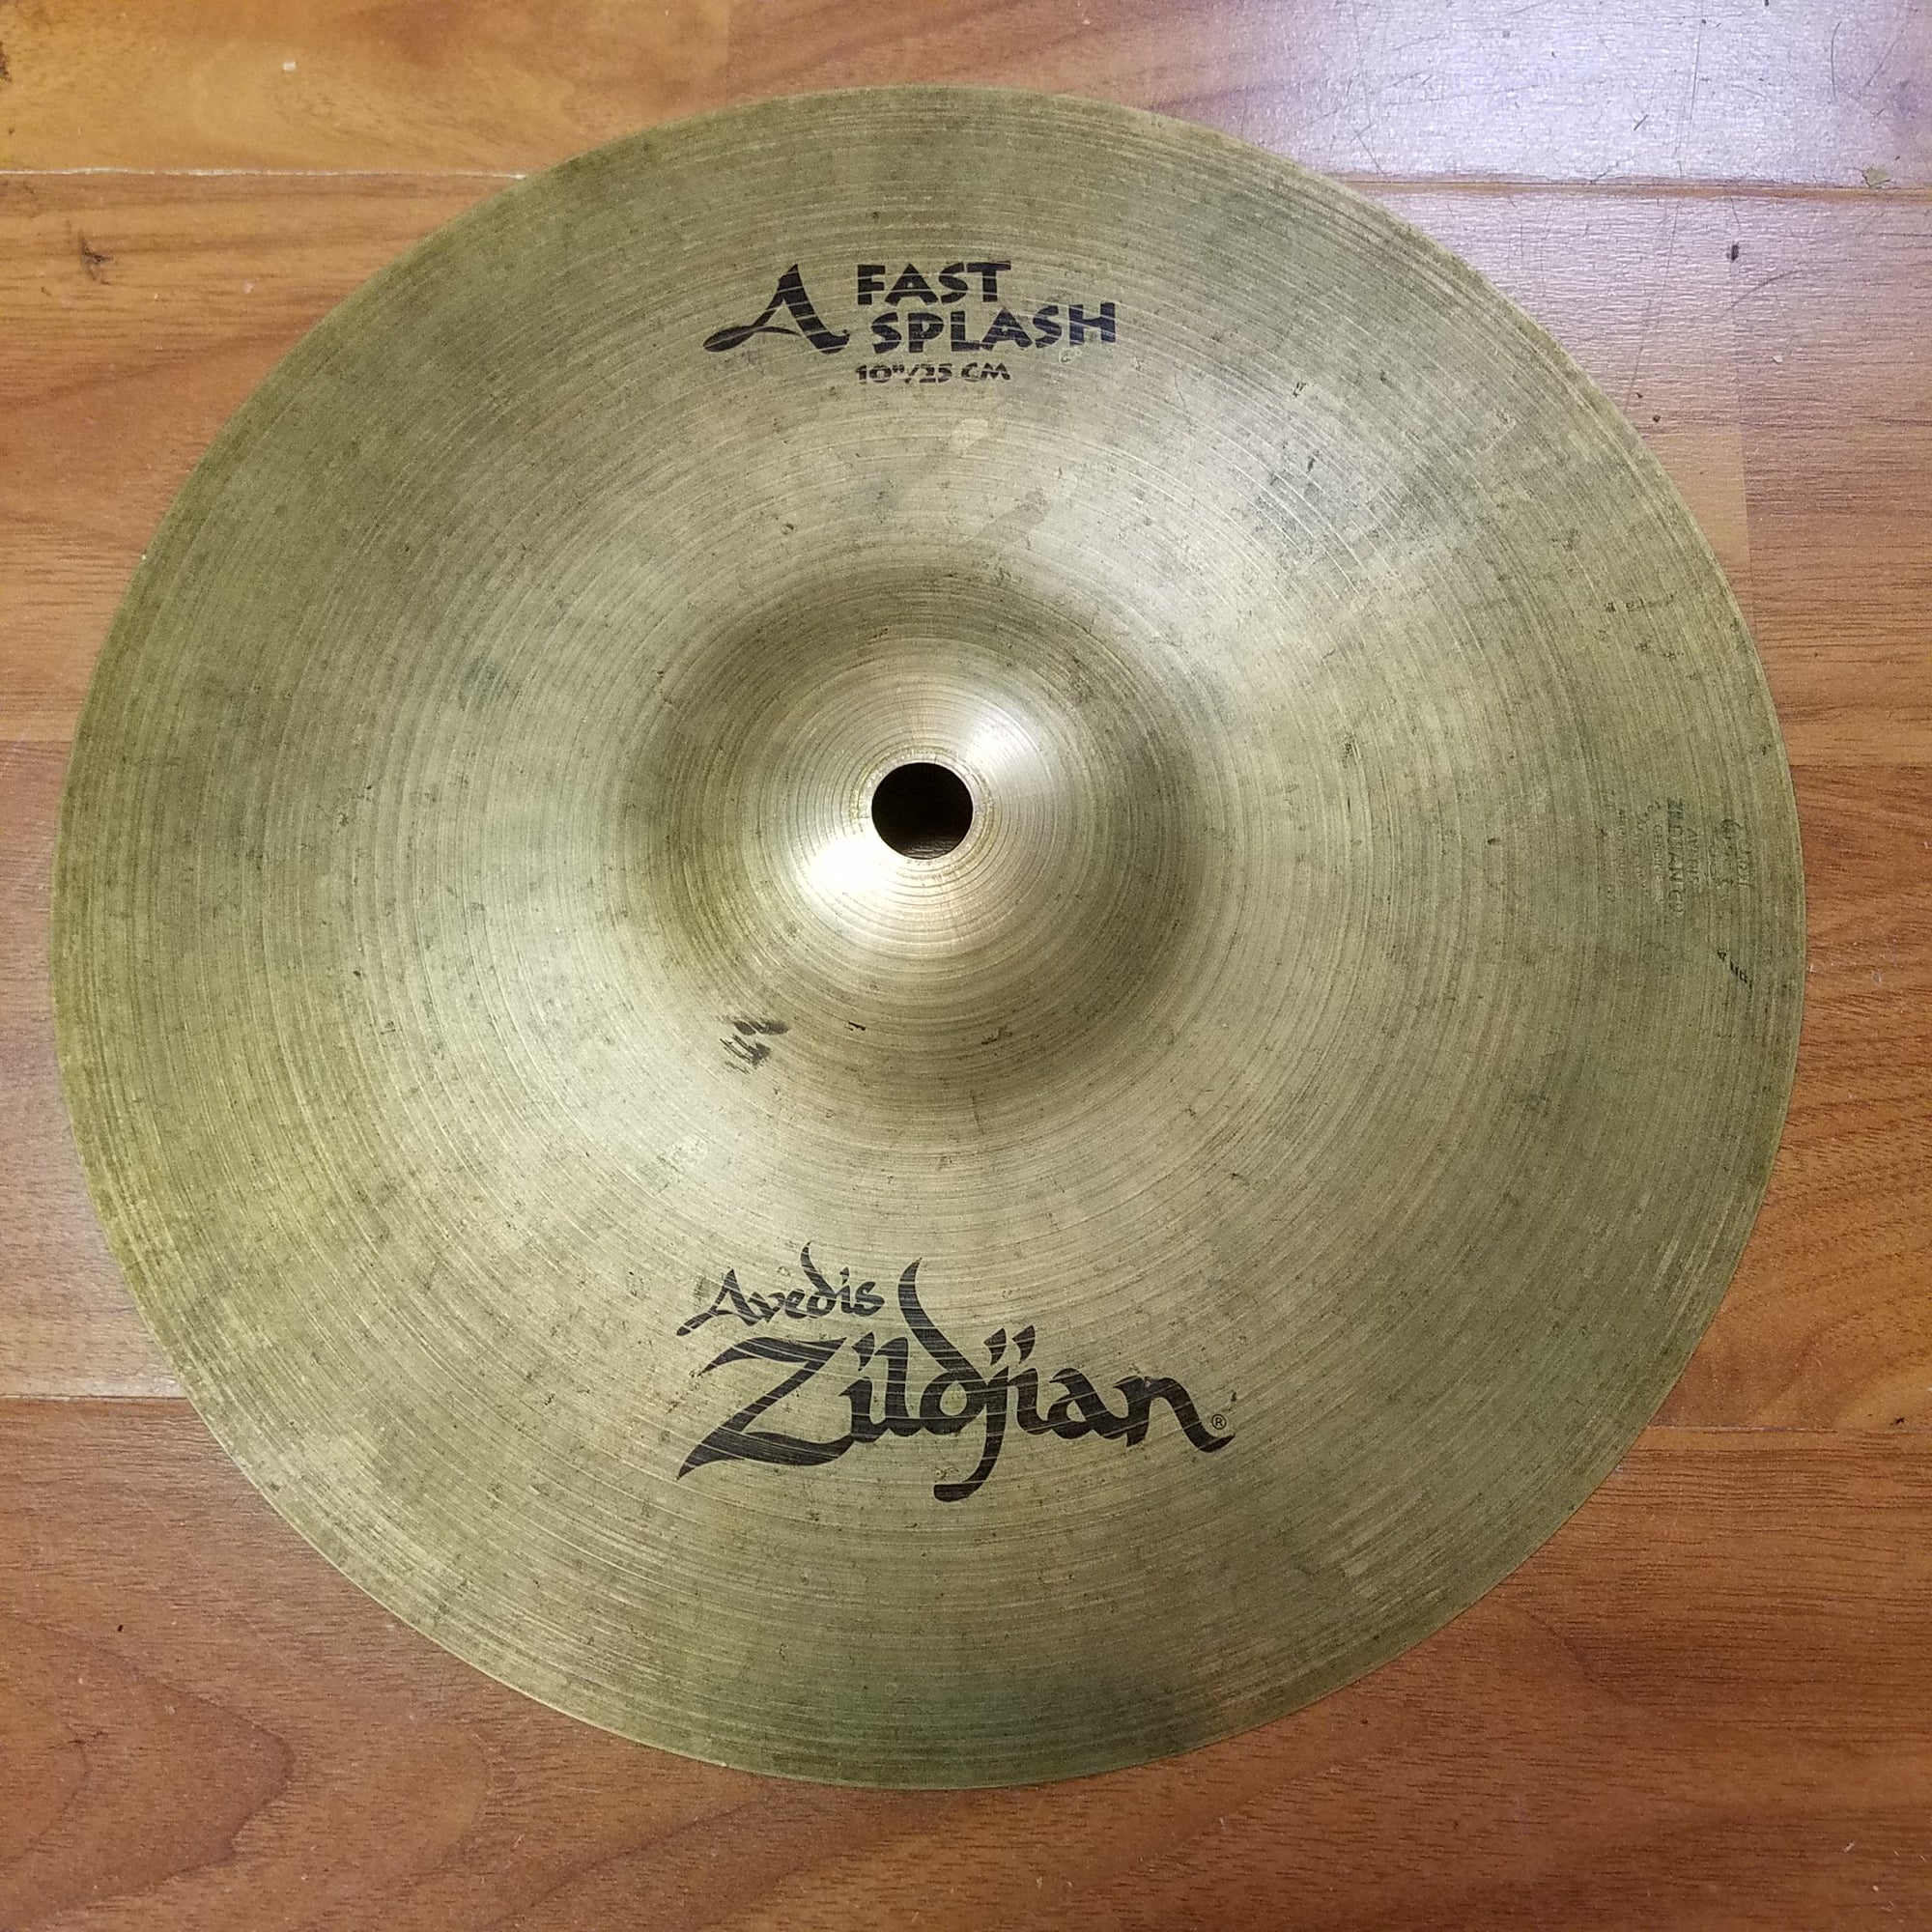 Zildjian in A Fast Splash Cymbal   Evolution Music